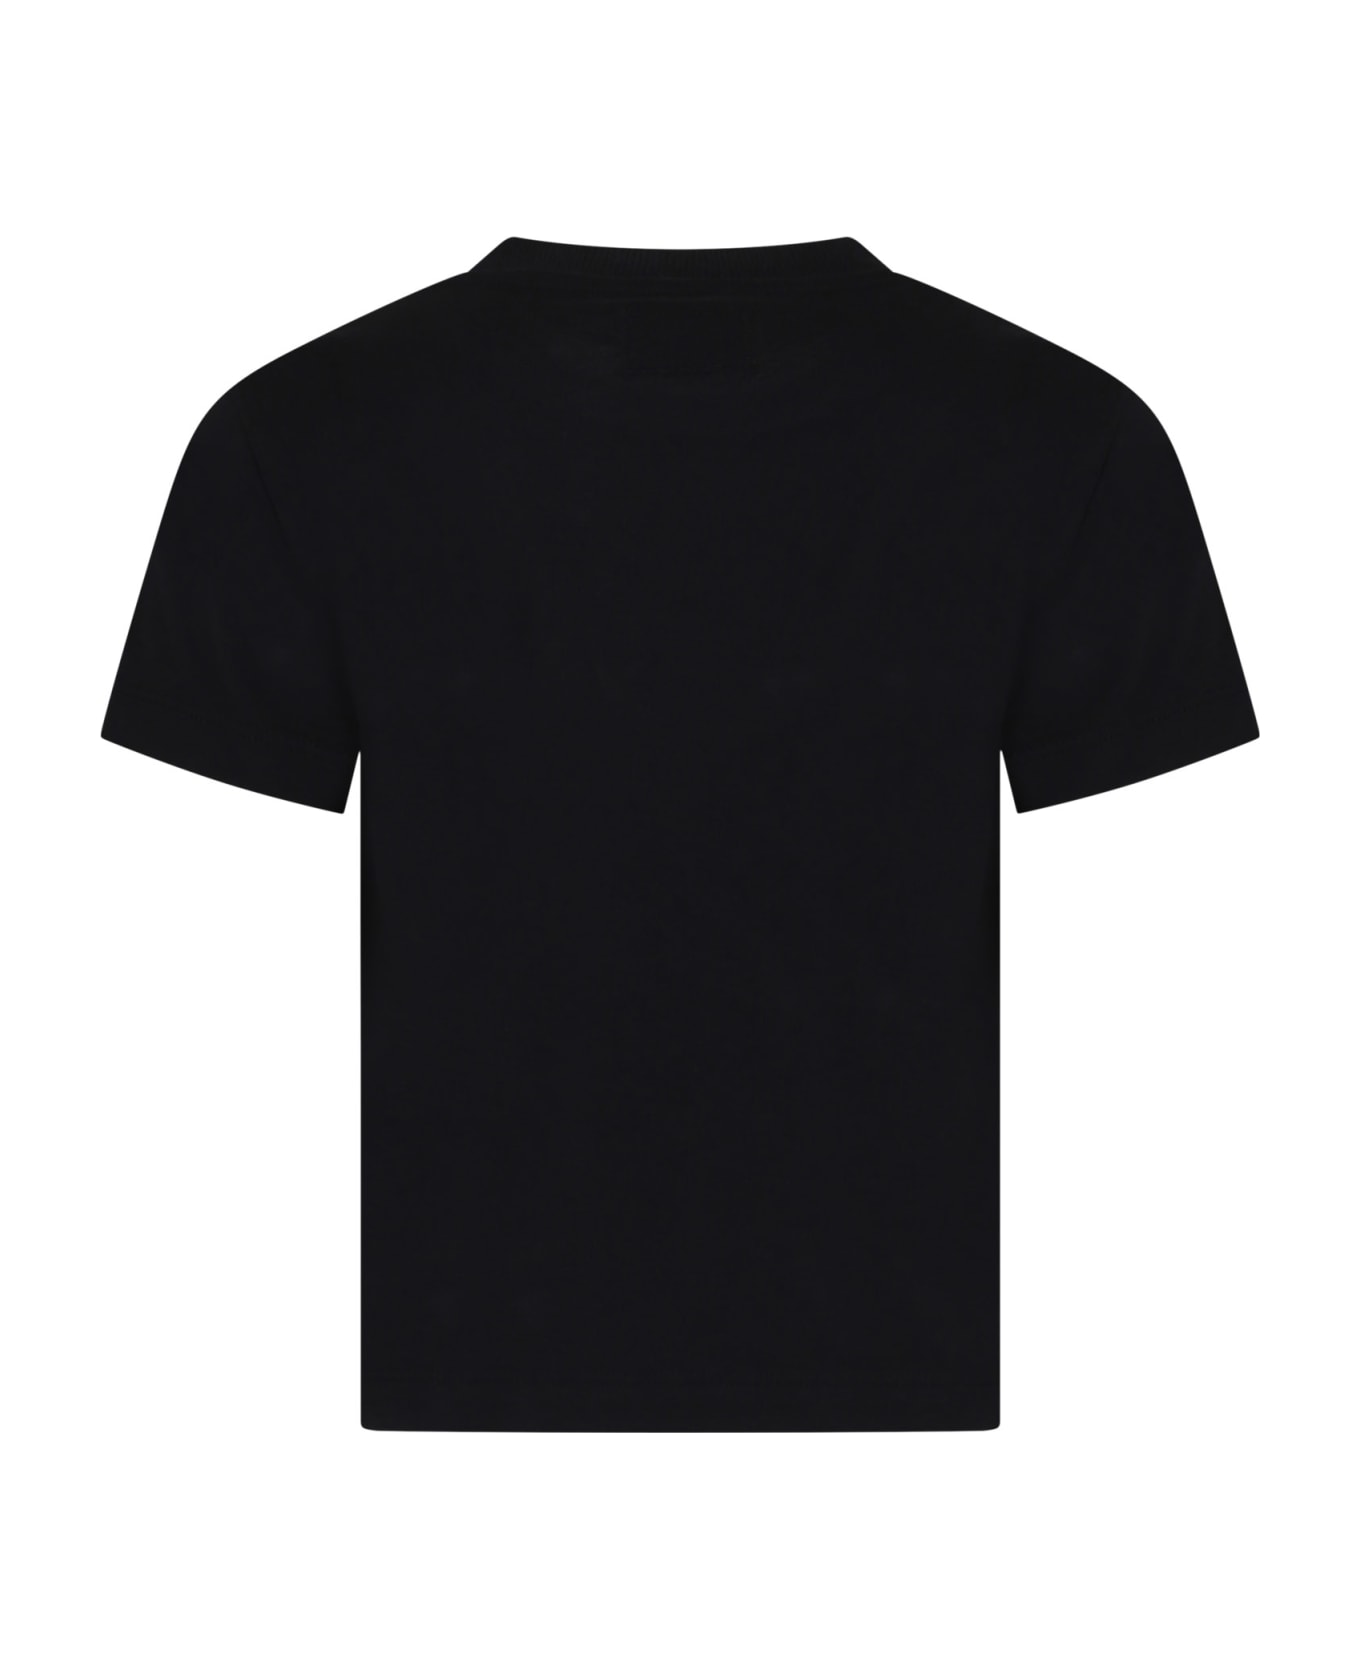 C.P. Company Undersixteen Black T-shirt For Boy With Logo - Nero/Black